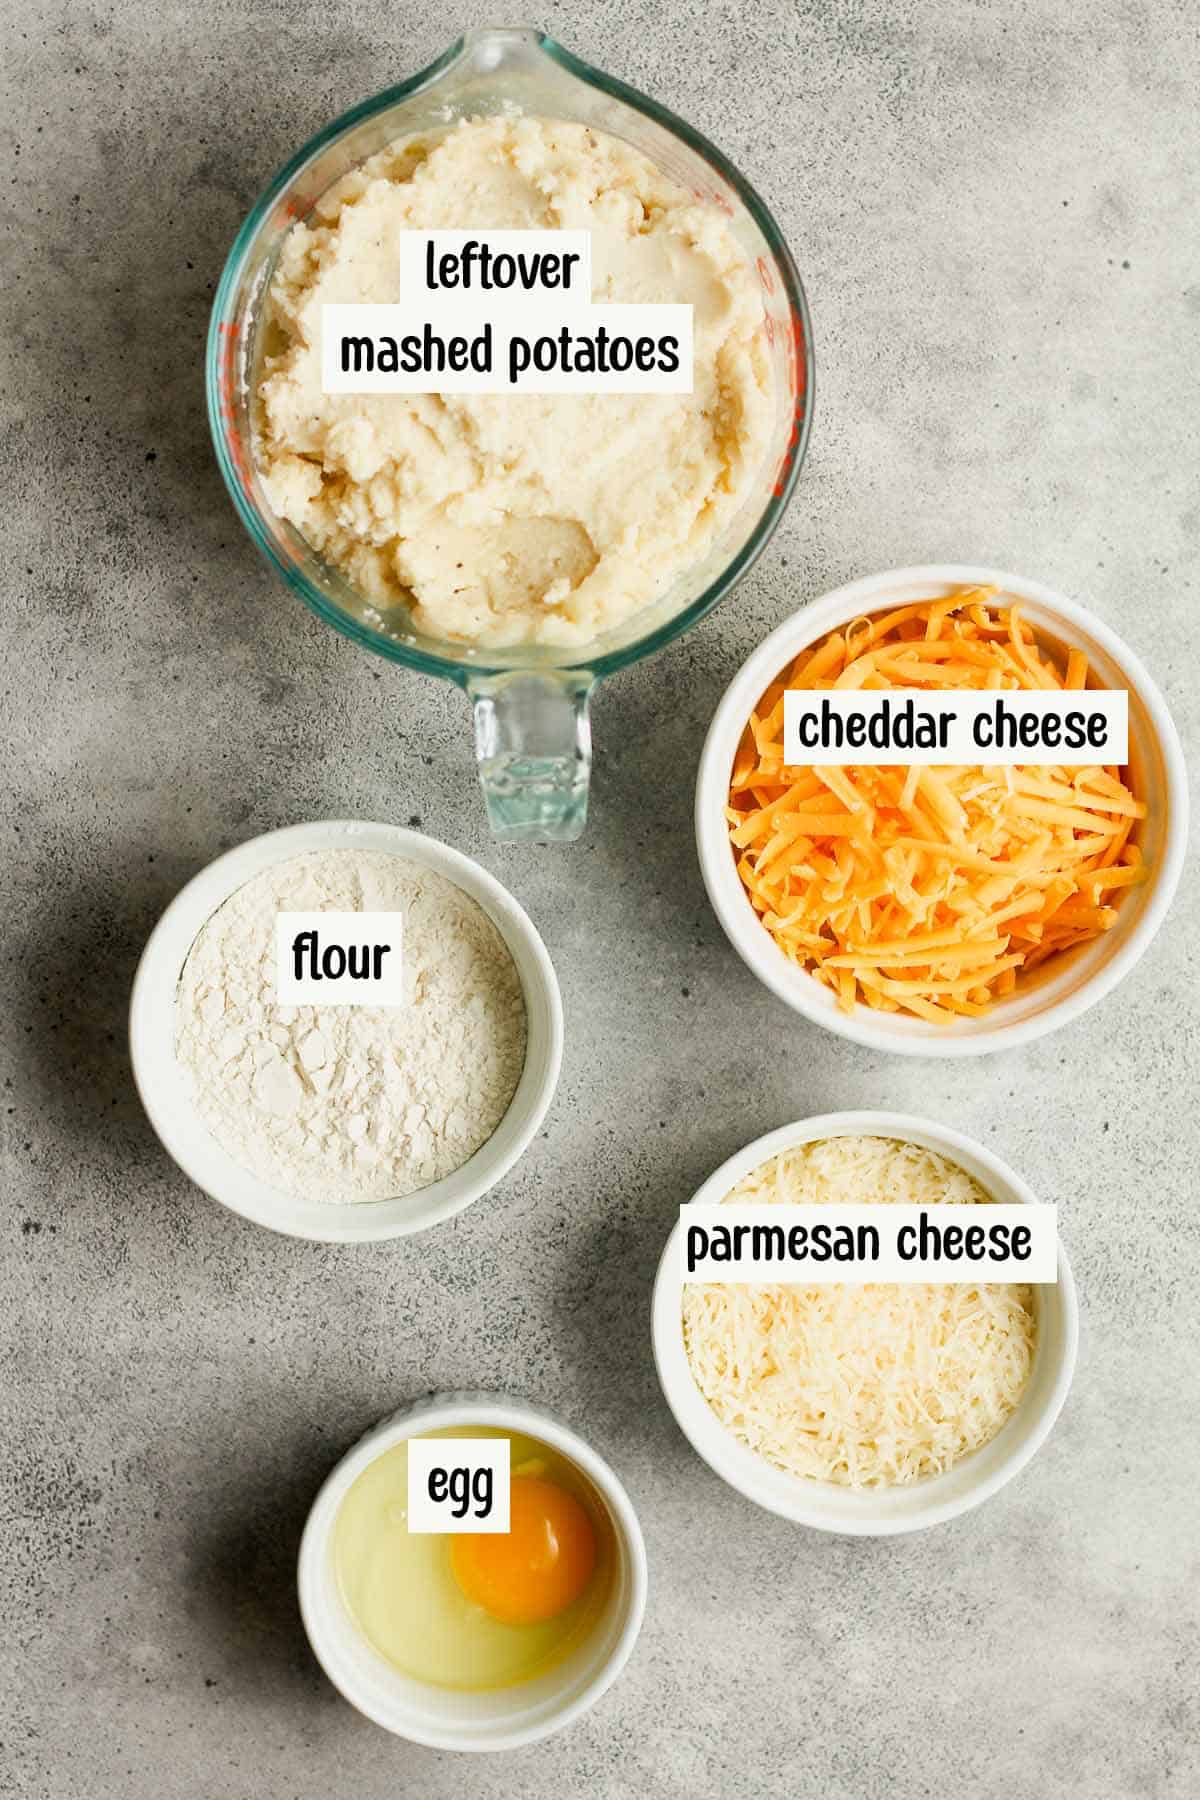 Bowls of the potato cake ingredients.